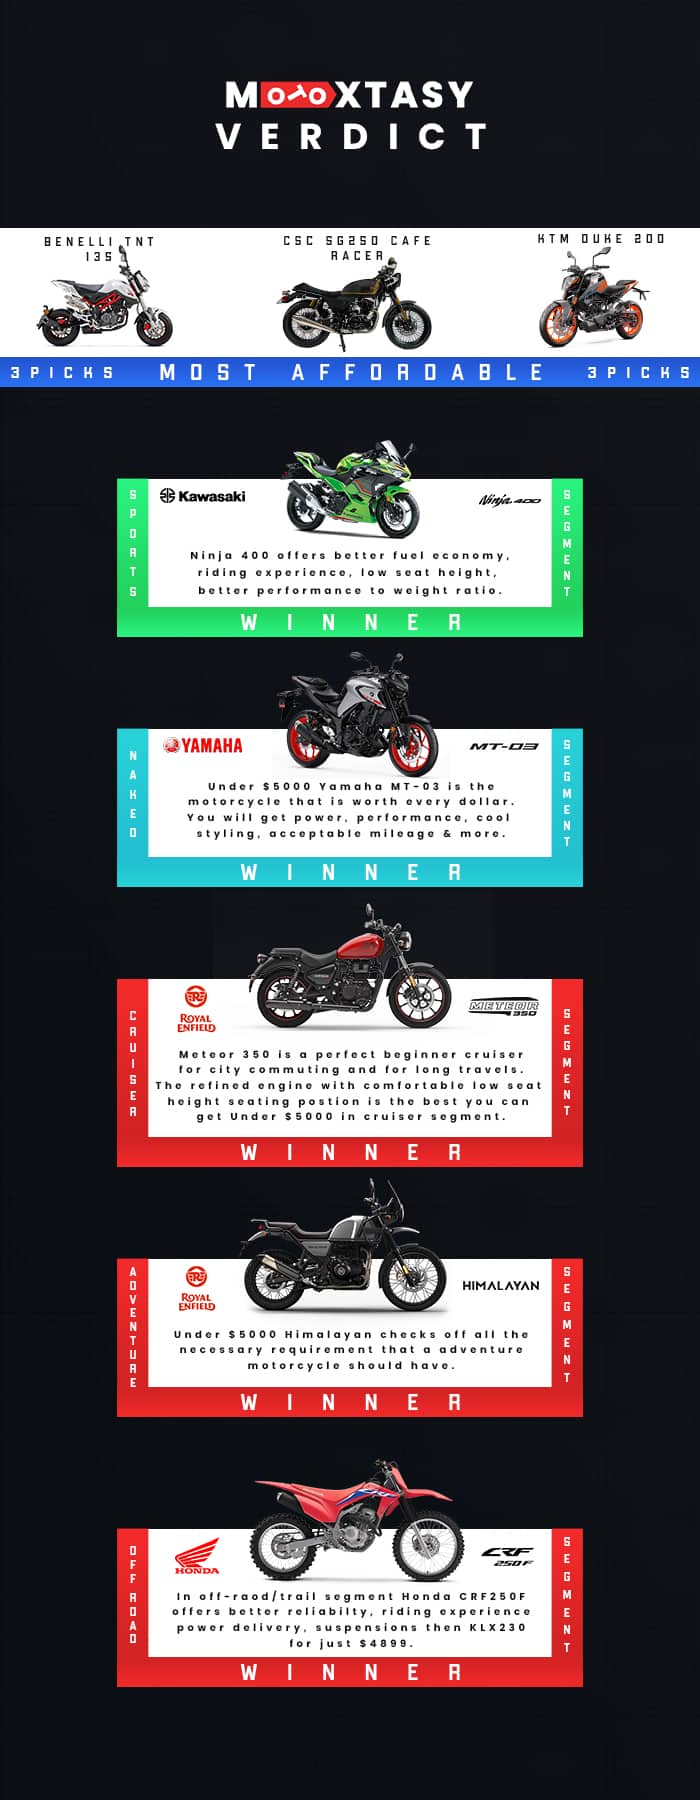 Top 20 Best Beginner Motorcycles Under $5000 In Each Segment